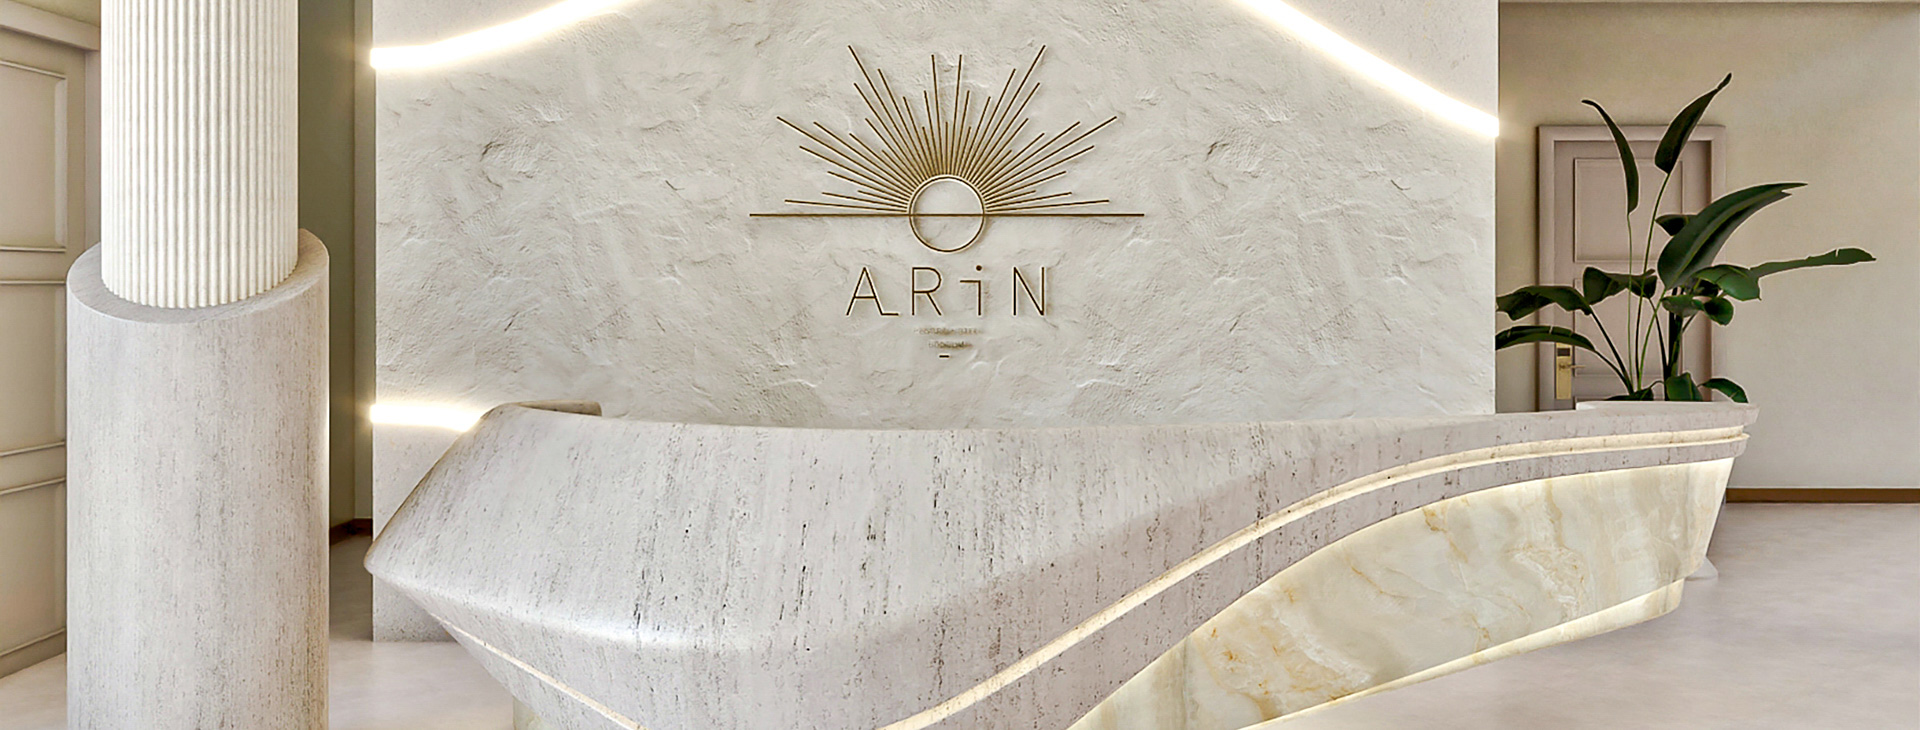 Arin Resort Obrázek1